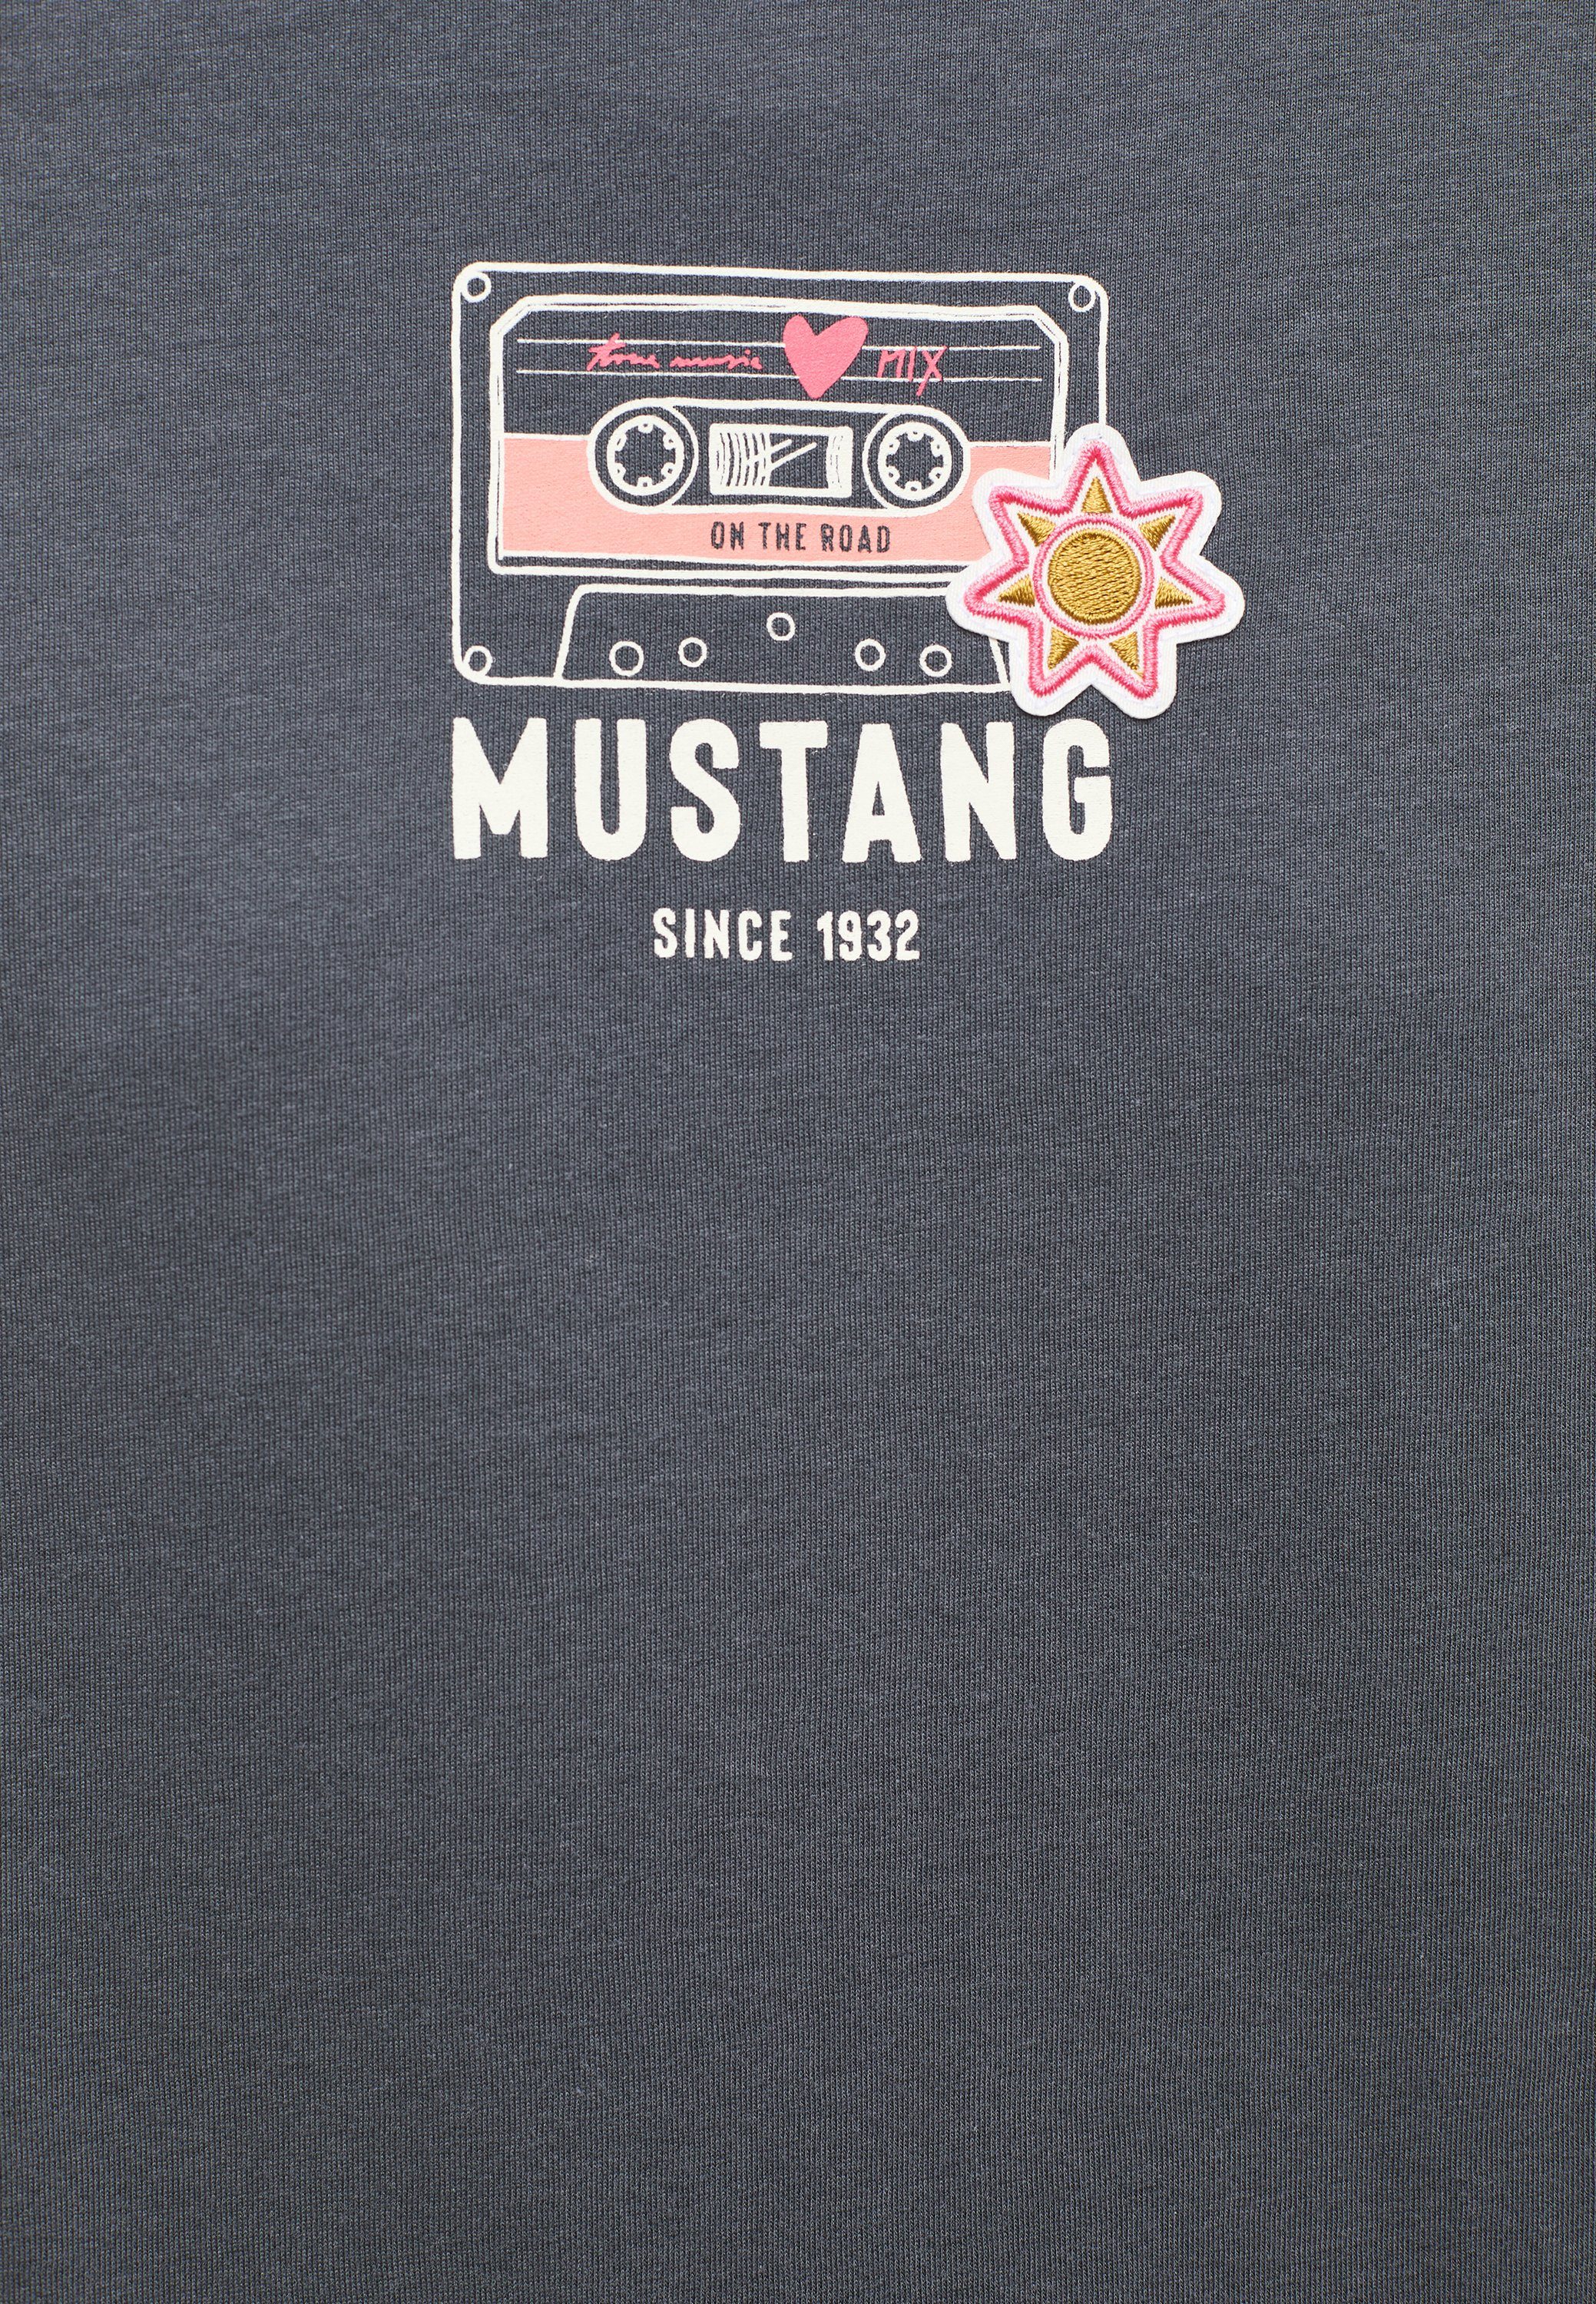 MUSTANG Kurzarmshirt Mustang dunkelgrau T-Shirt Print-Shirt